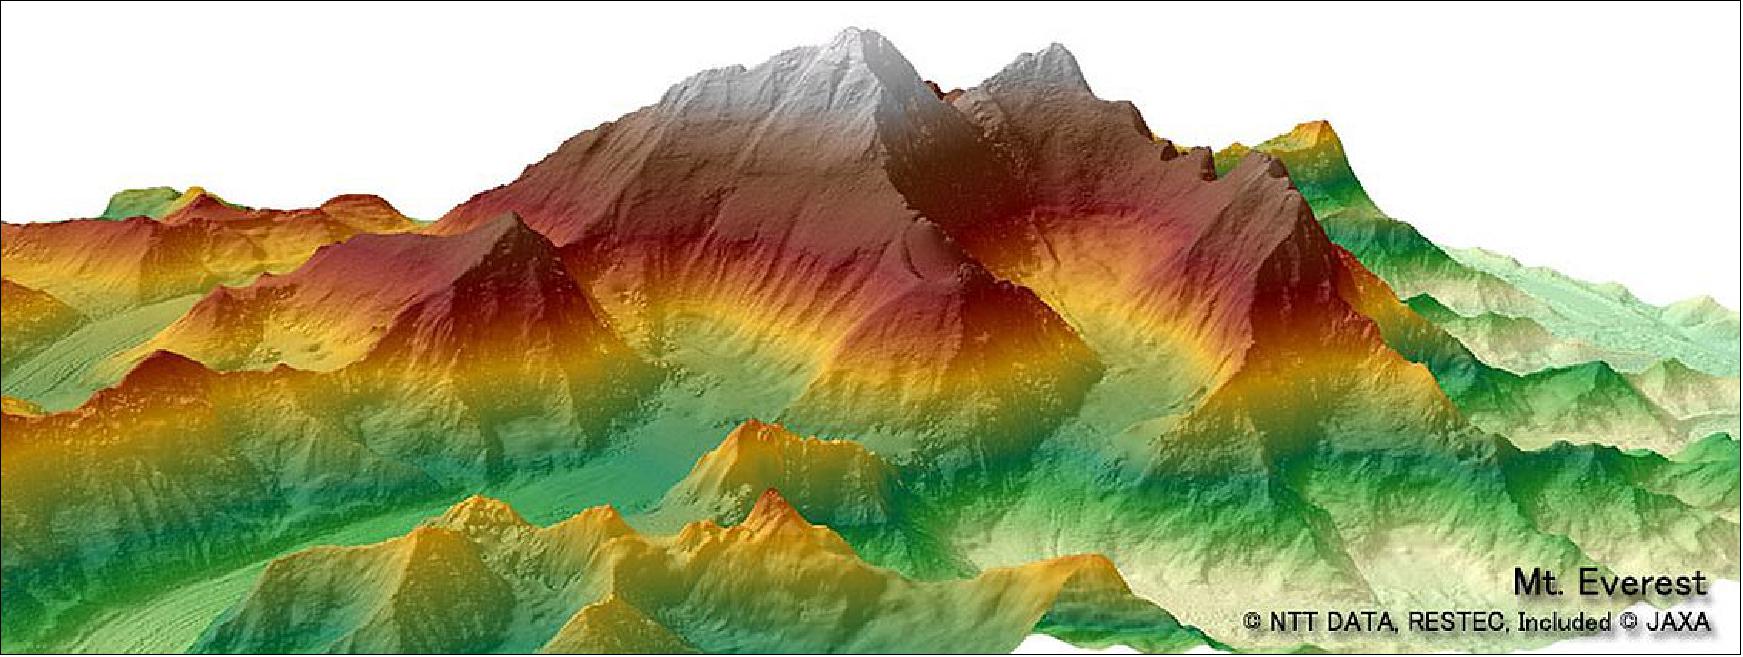 Figure 11: Sample digital 3D image of Mount Everest (image credit: NTT Data, RESTEC, JAXA)